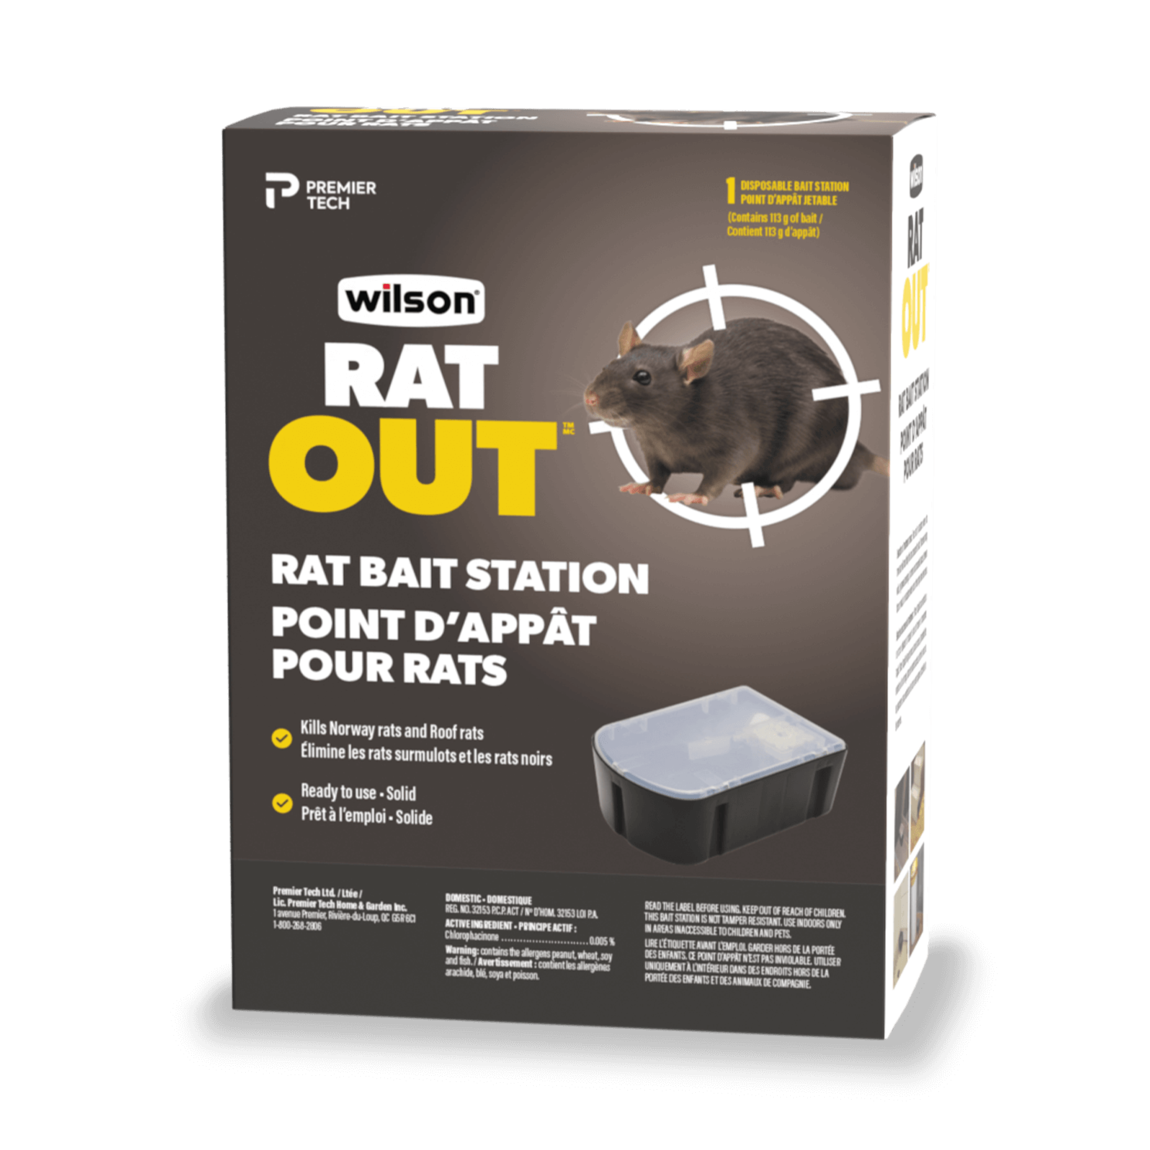 https://www.wilsoncontrol.com/sites/ptgc_wilson/files/styles/swiper_gallery_image/public/2022-01/wilson-rat-out-rat-bait-station.png?itok=NhurM6YQ